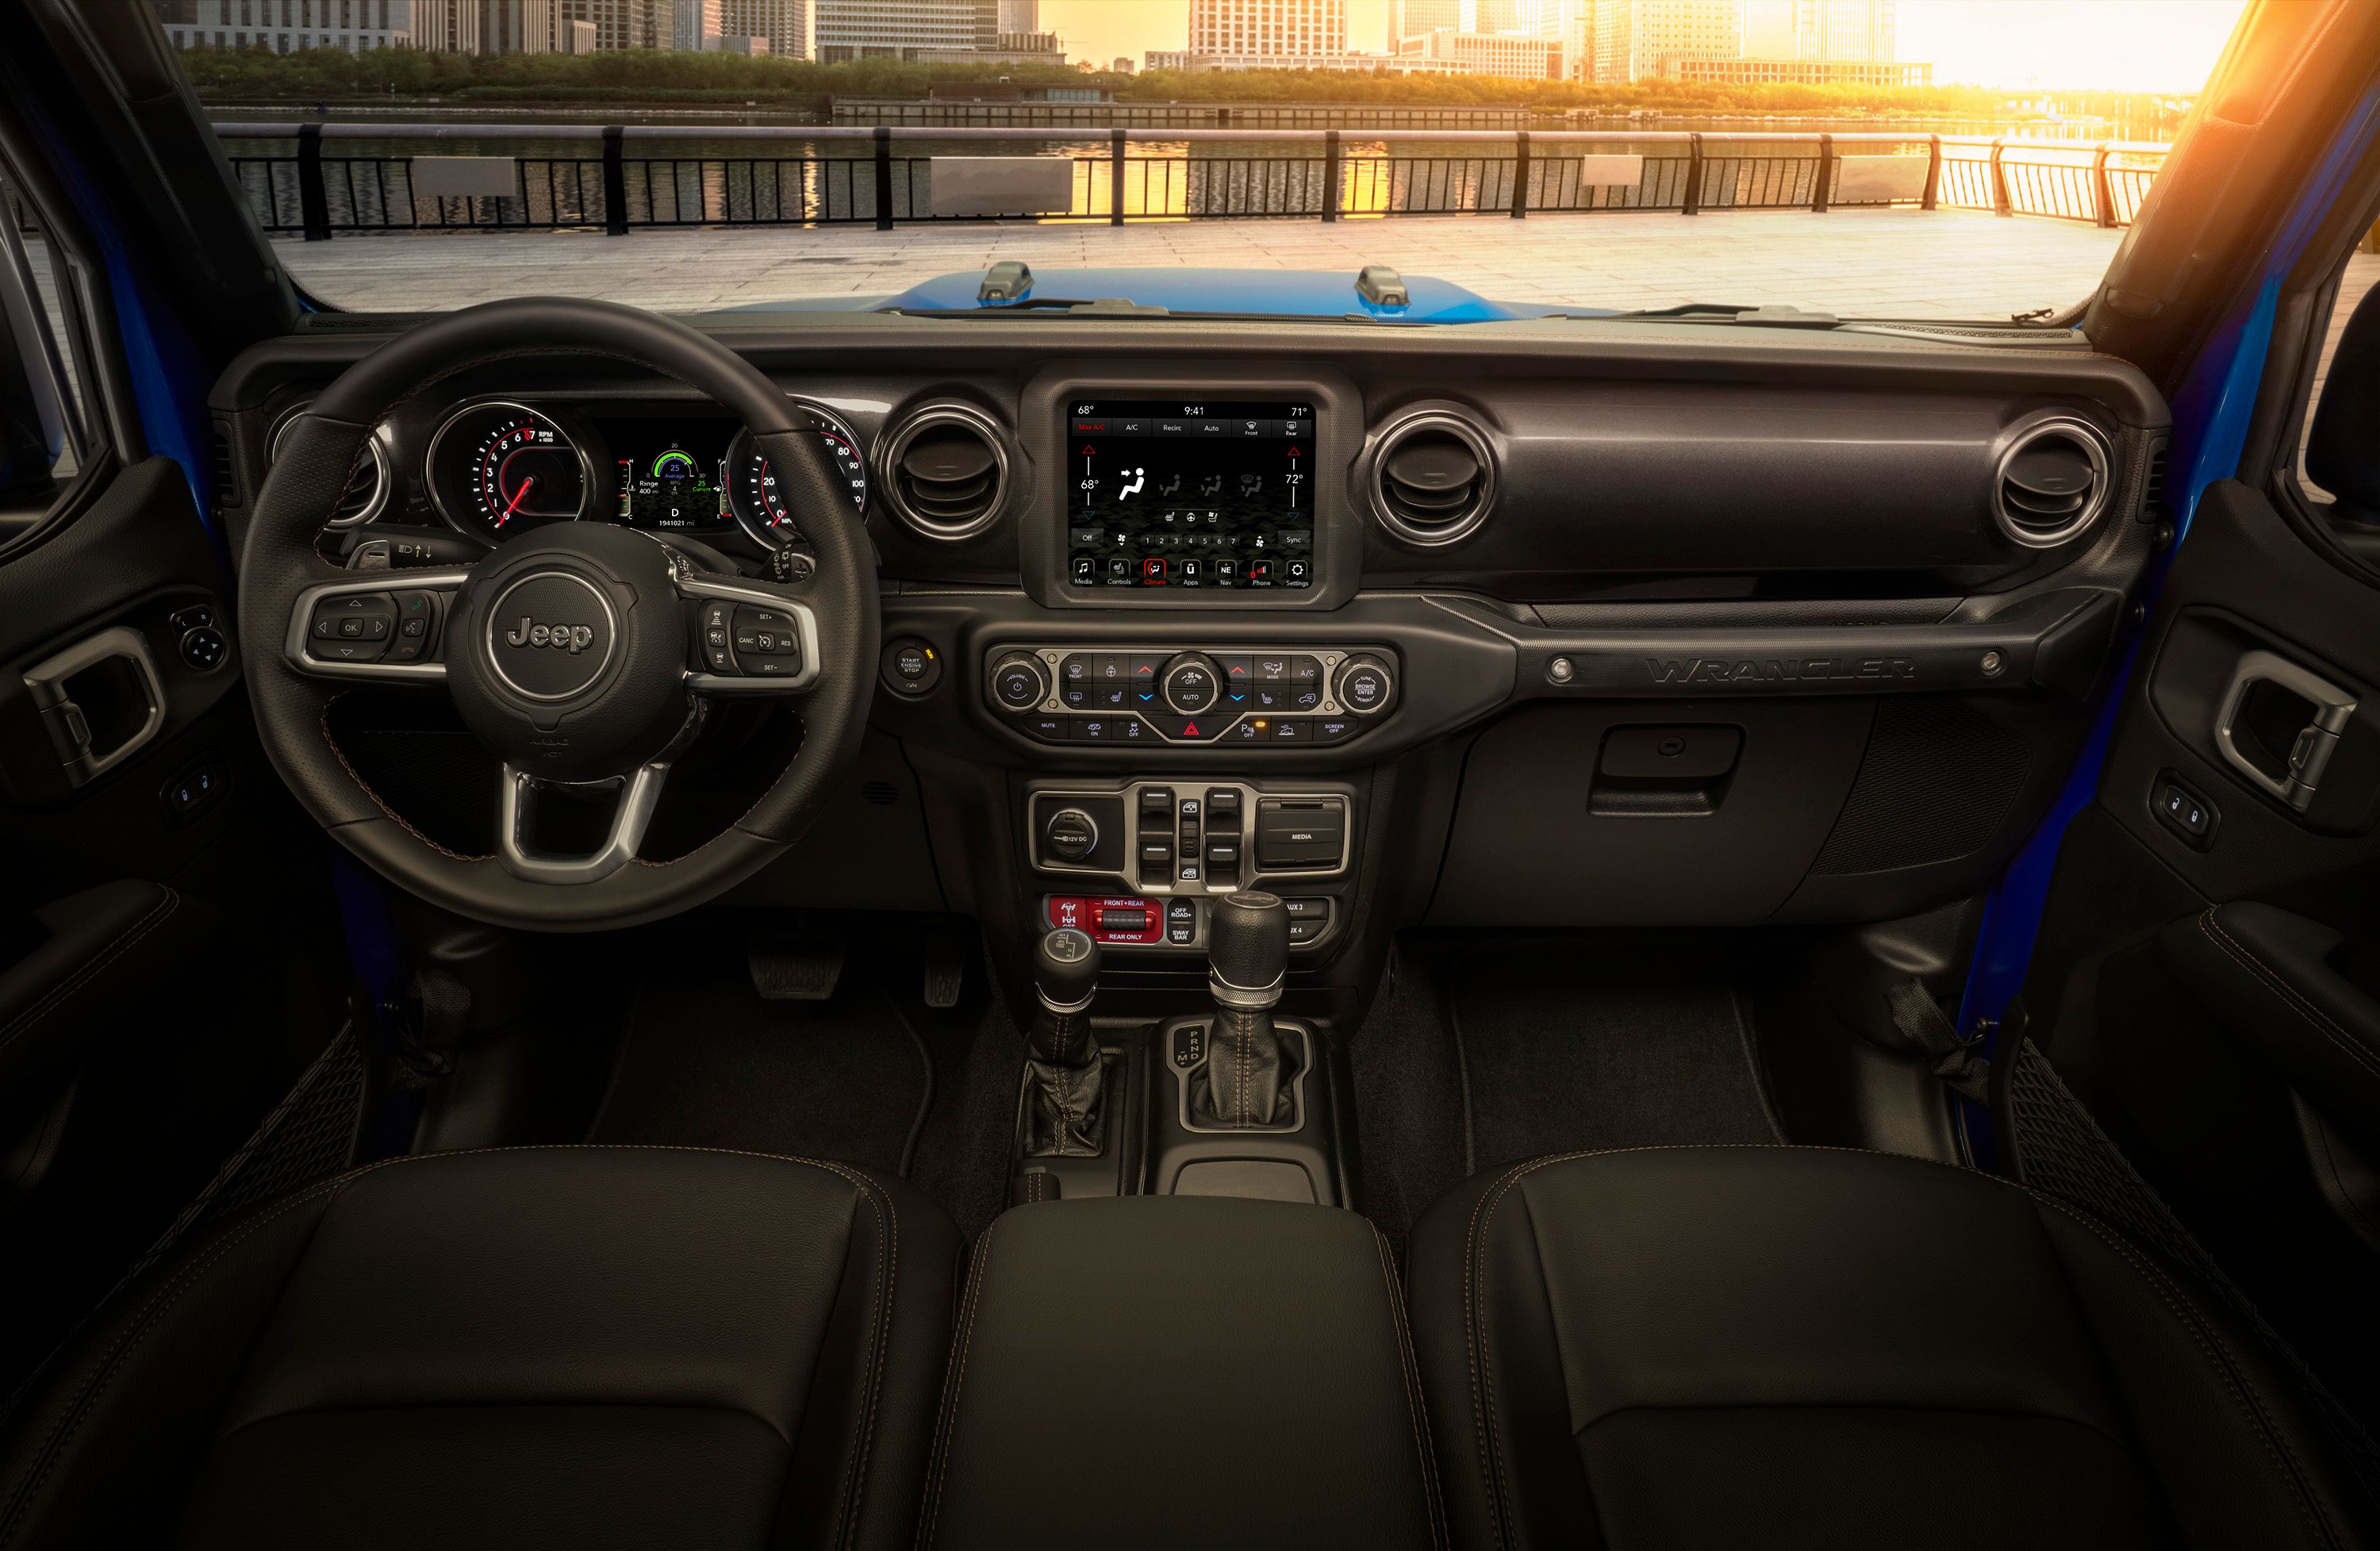 The 2022 Jeep Wrangler Interior.